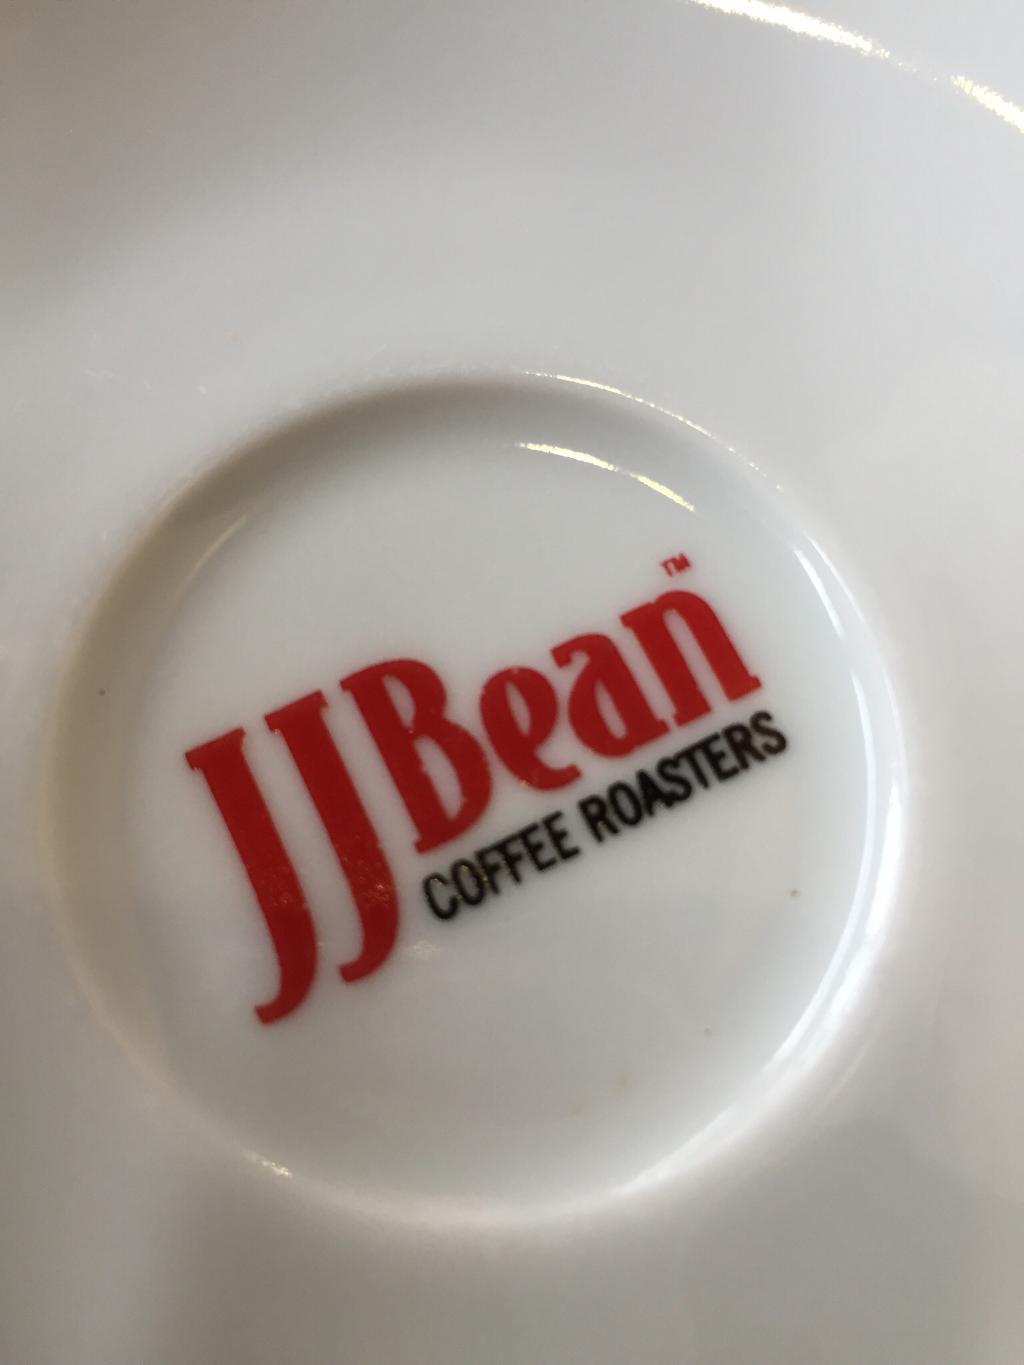 JJ Bean Coffee Roasters - Main St.